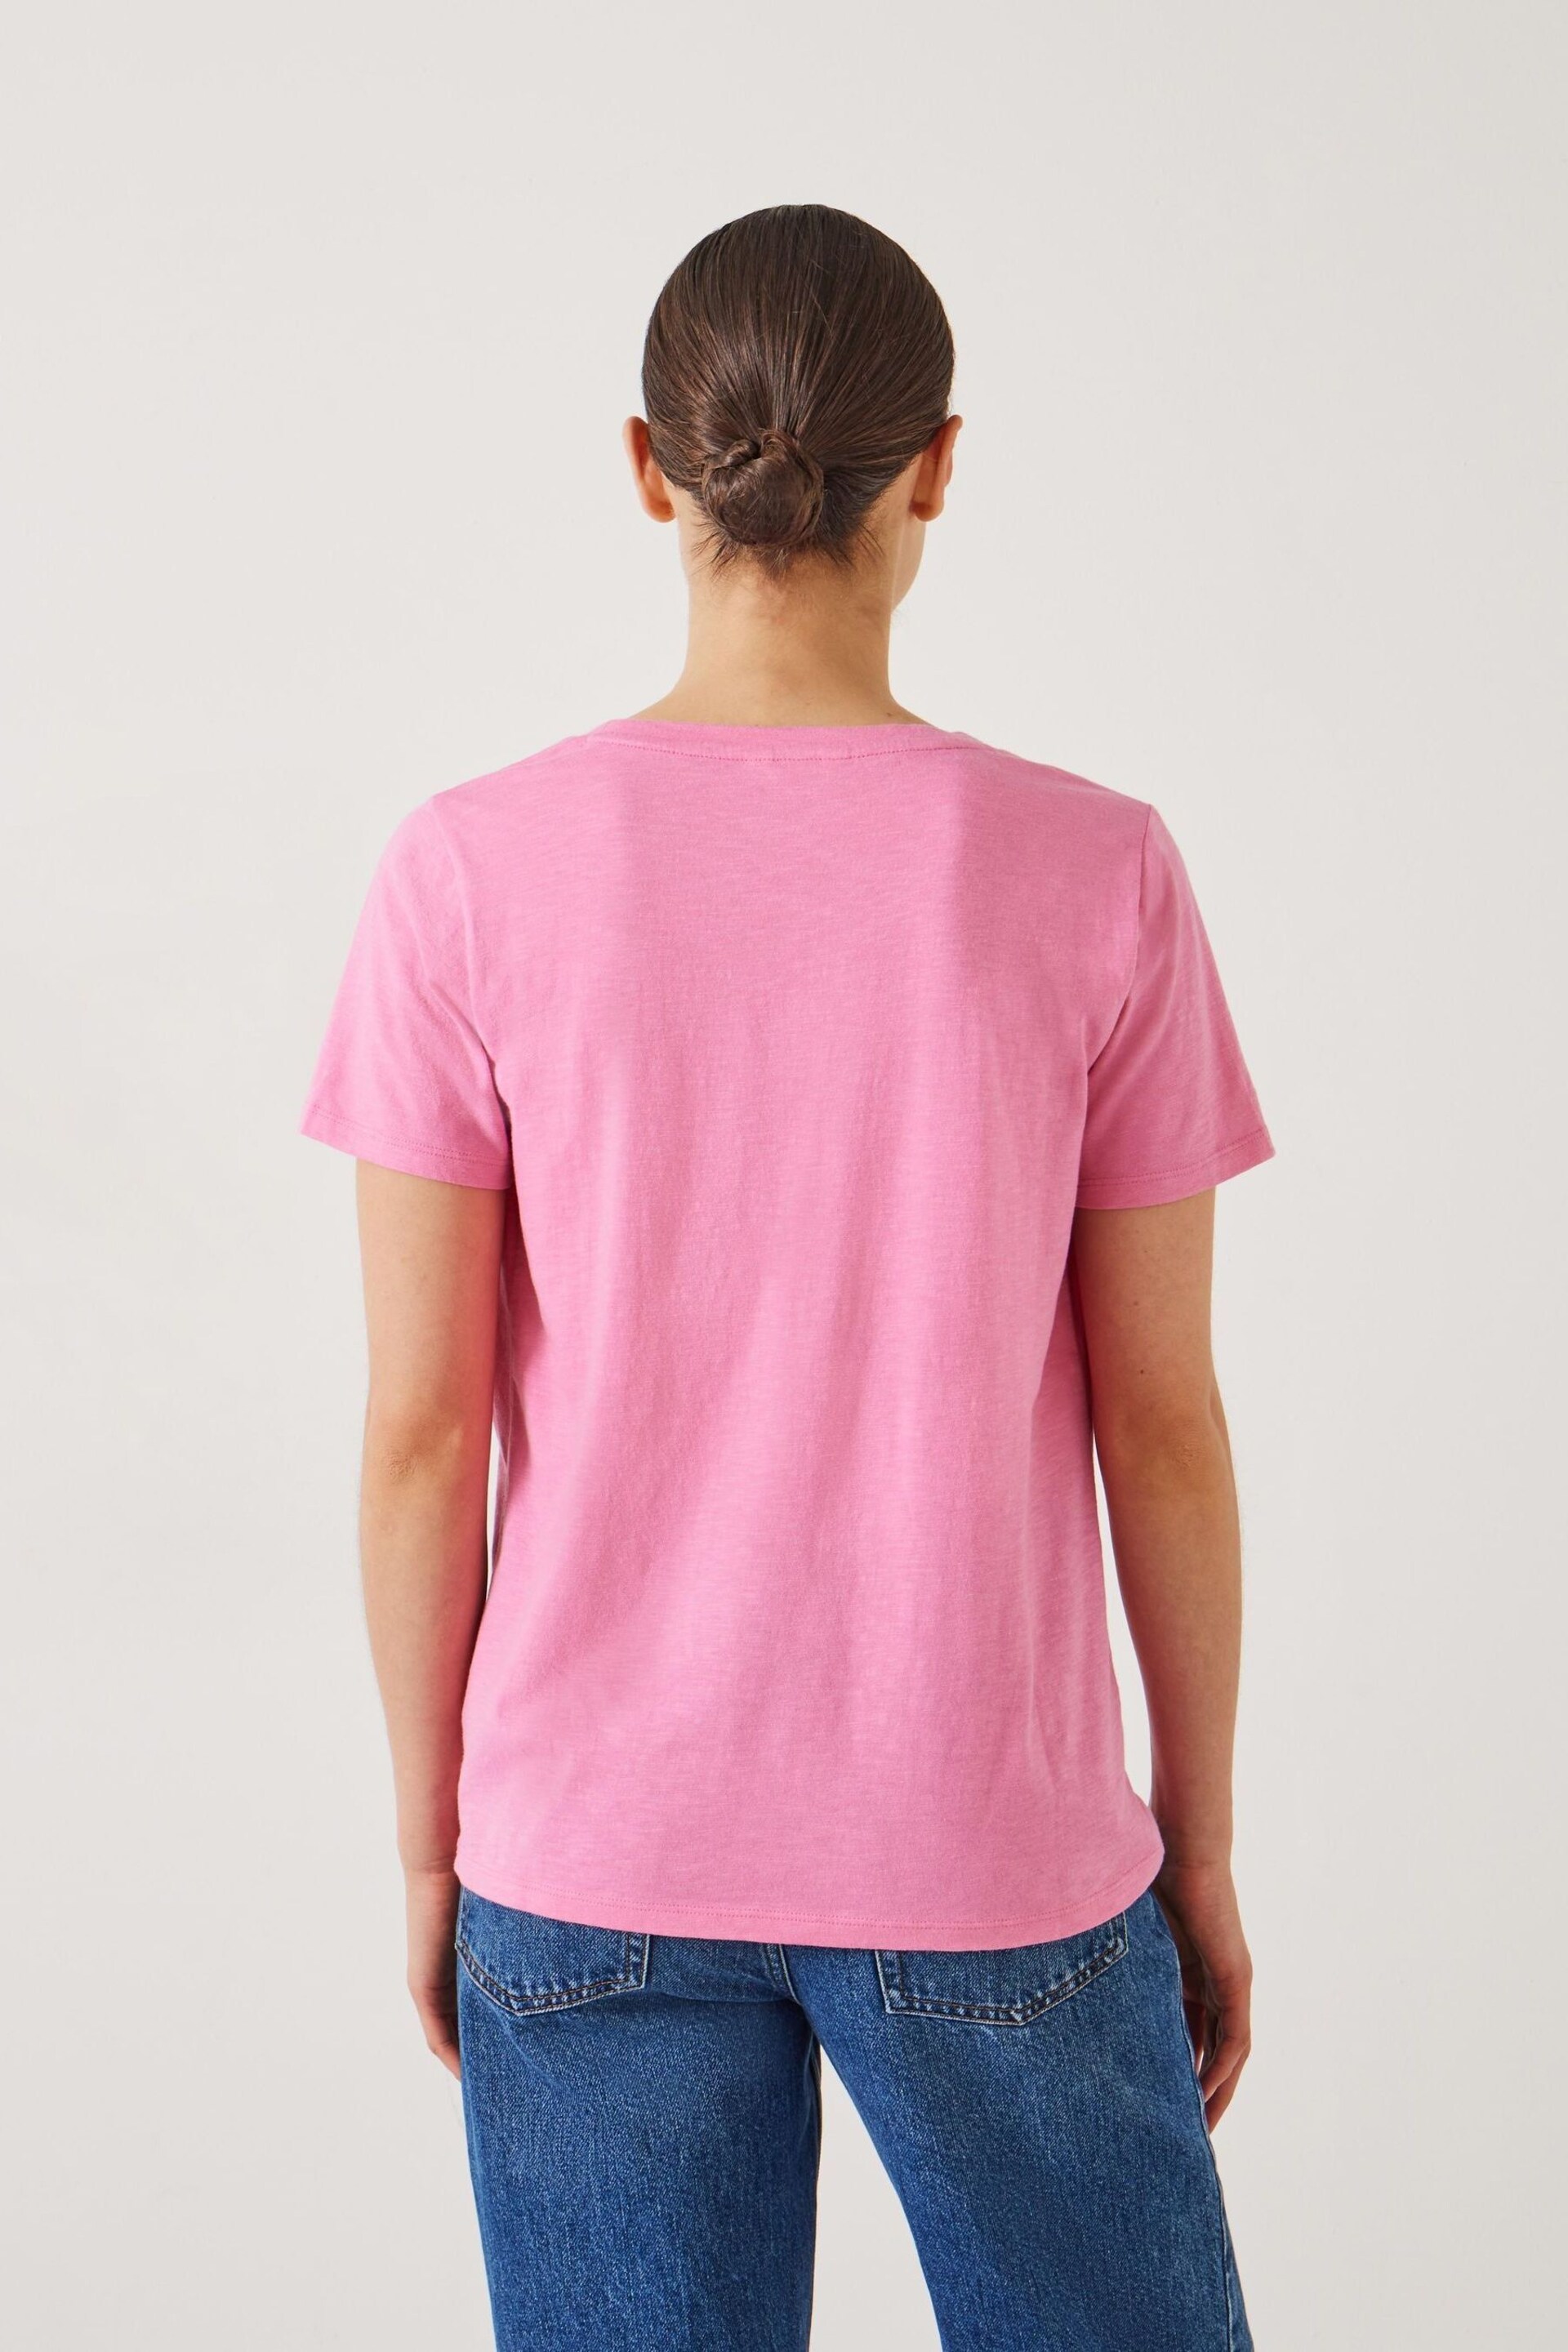 Hush Pink Hari Scoop Neck Cotton Slub T-Shirt - Image 3 of 5